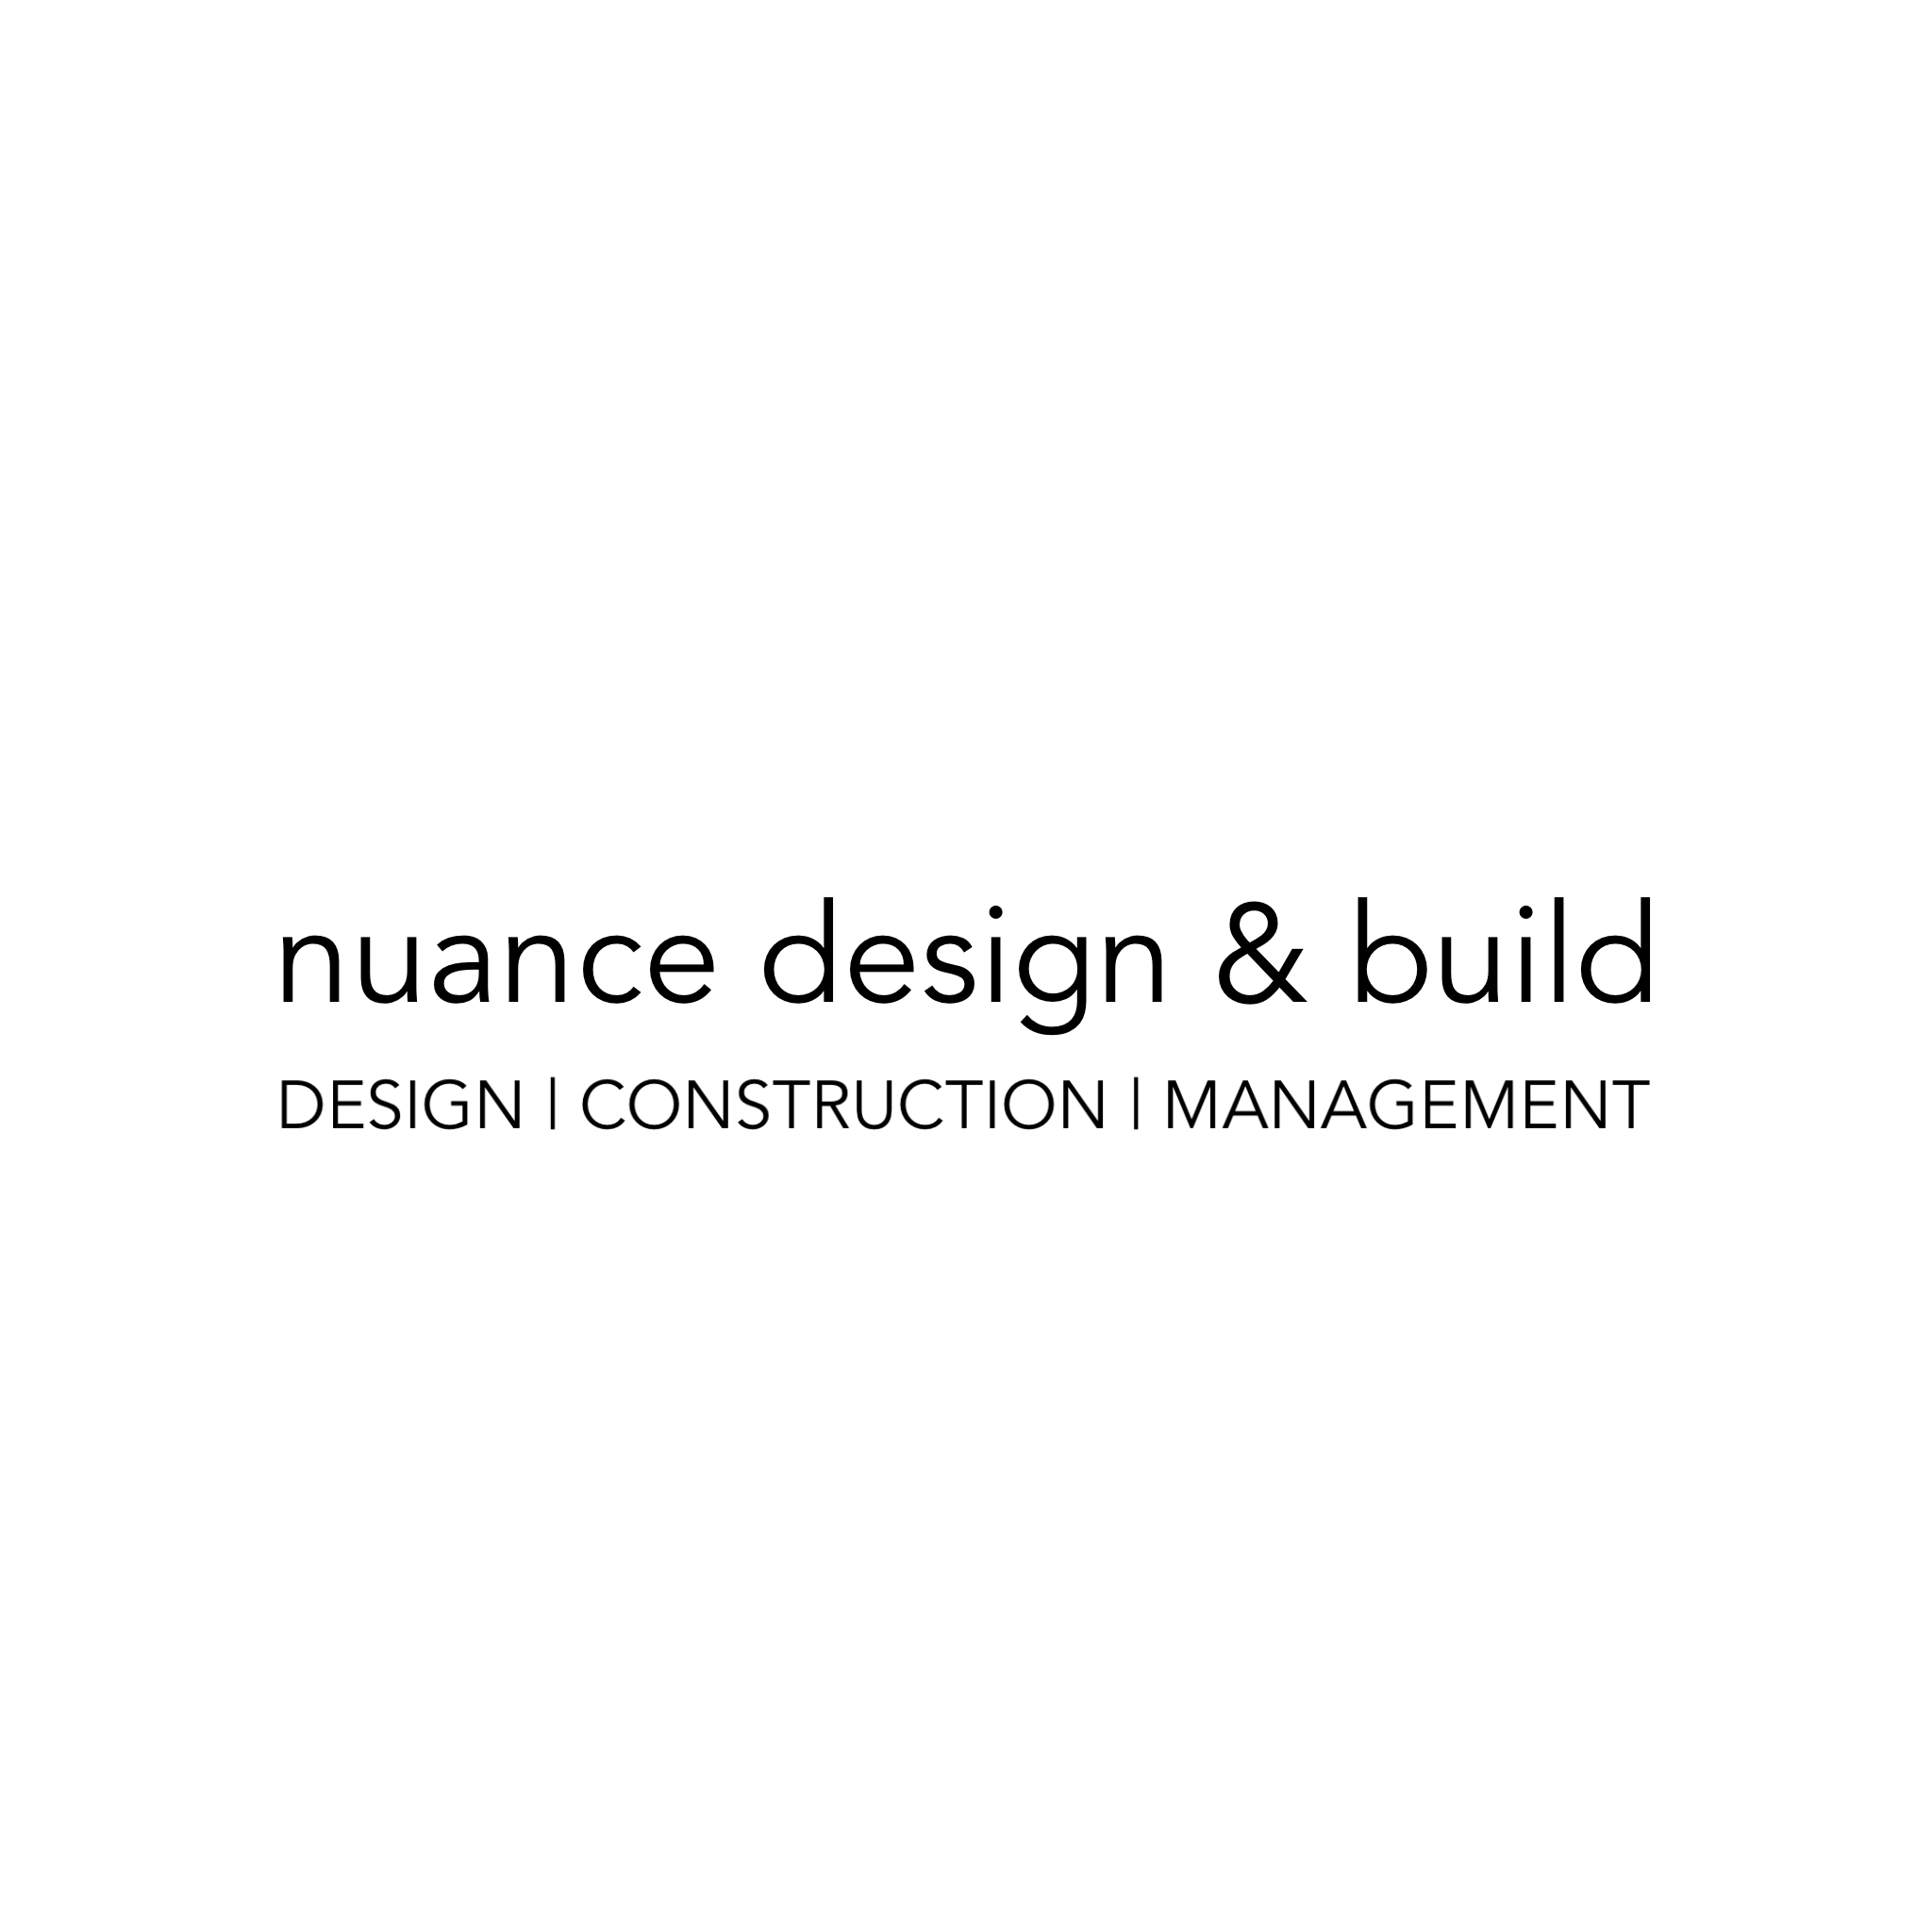 Nuance Design Build's logo